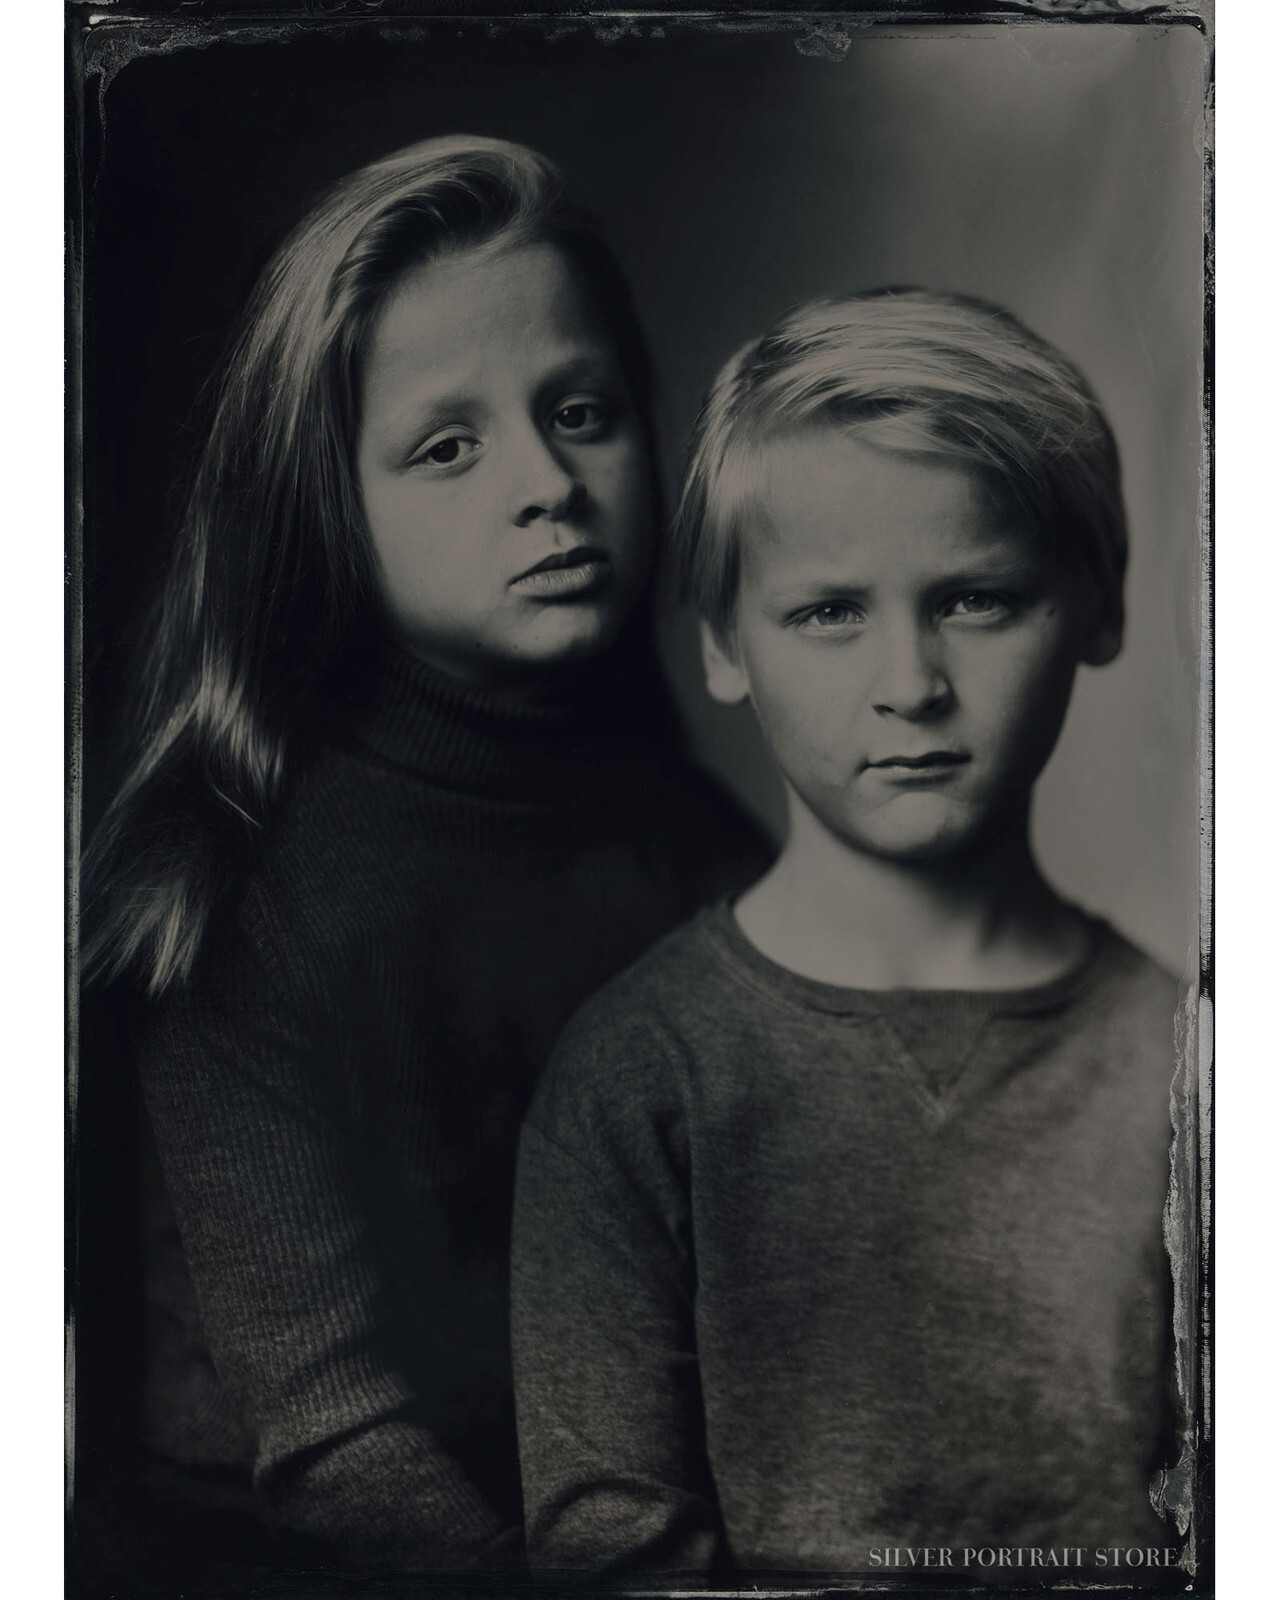 Jannele & Floris-Silver Portrait Store-scan from Wet plate collodion-Tintype 13 x 18 cm.